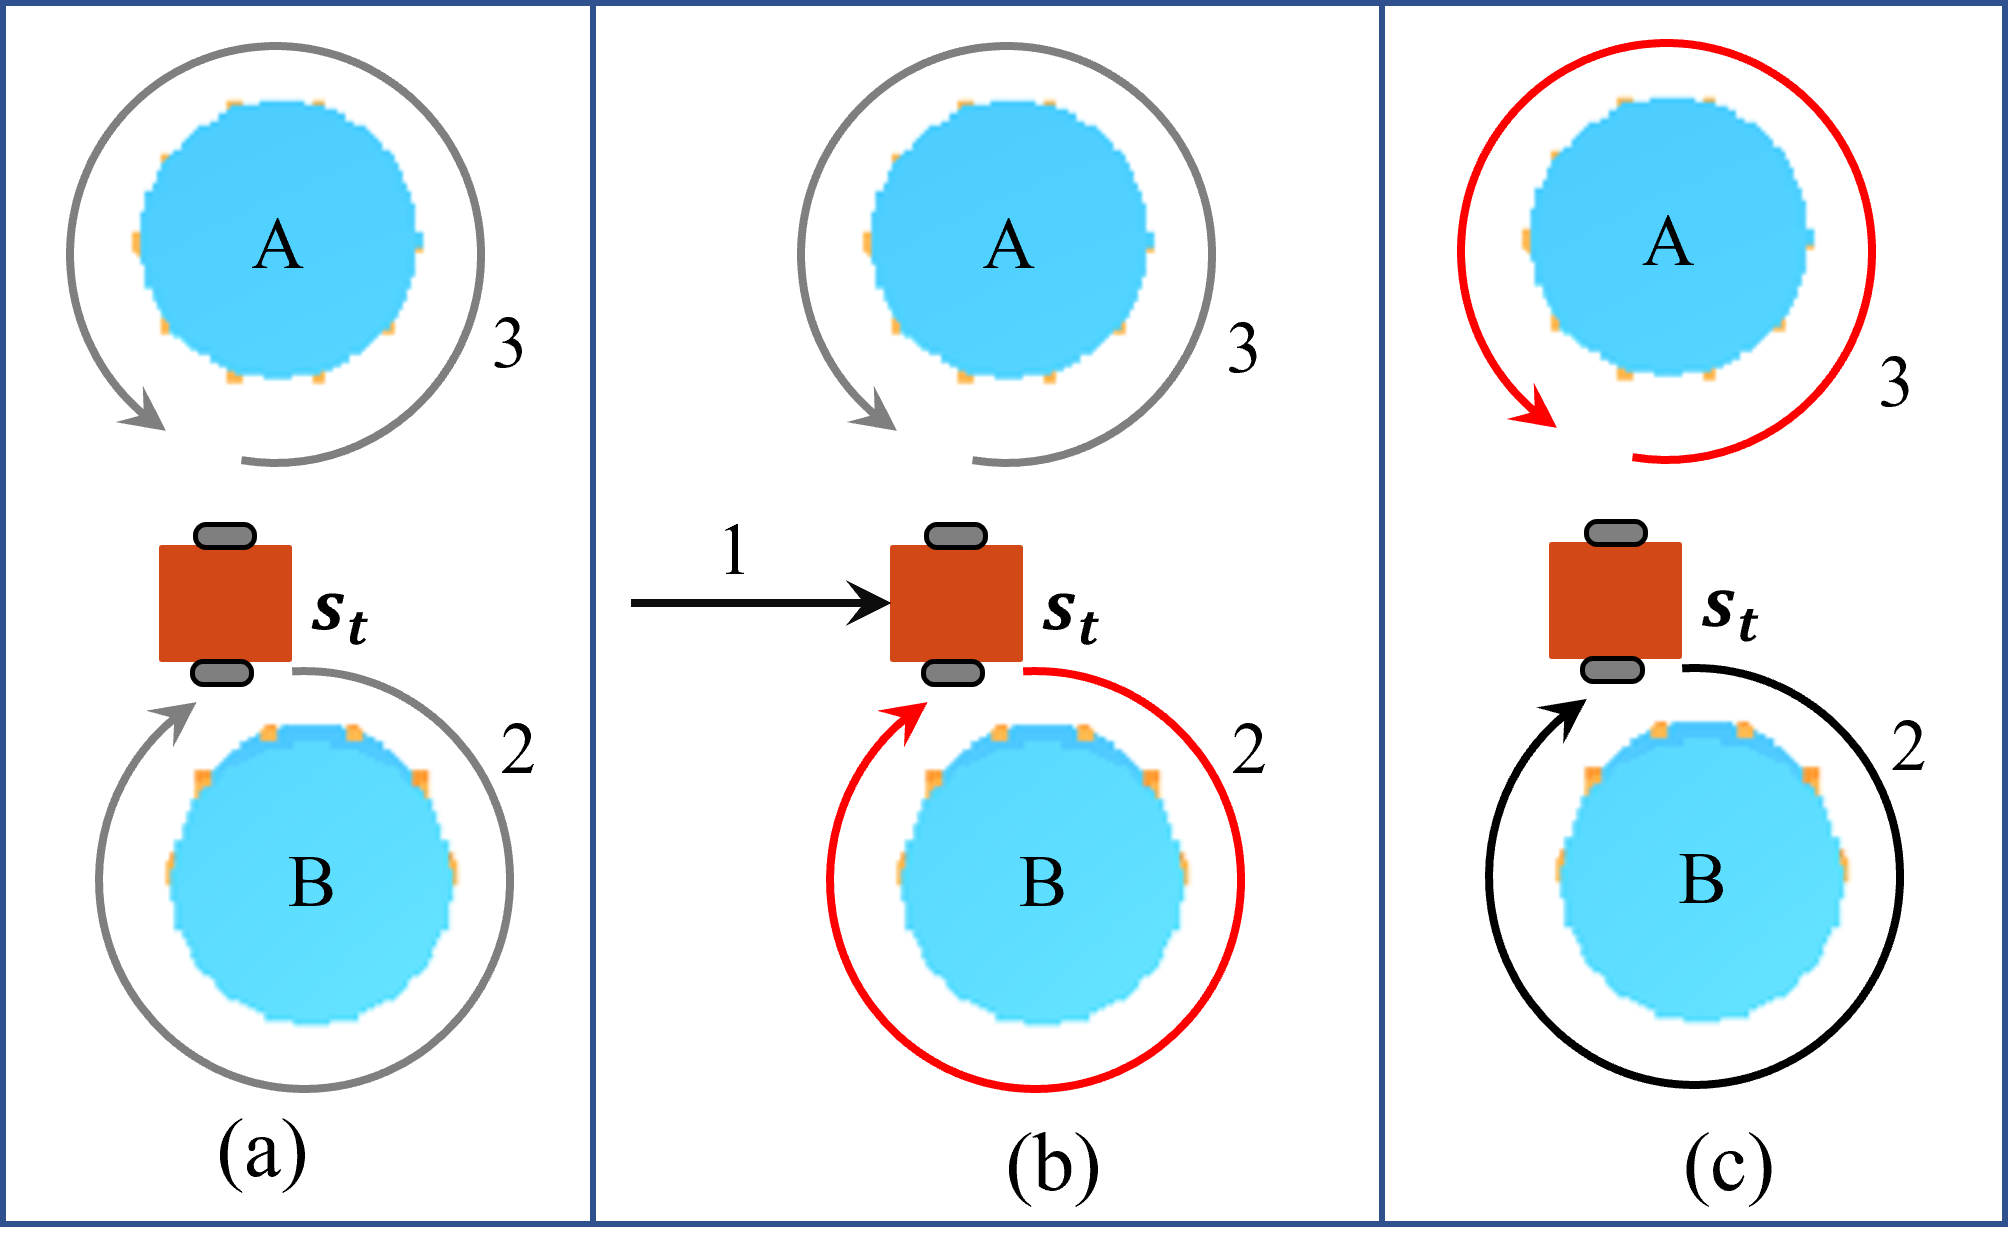 Figure 1. A Robotic Long-horizon Task